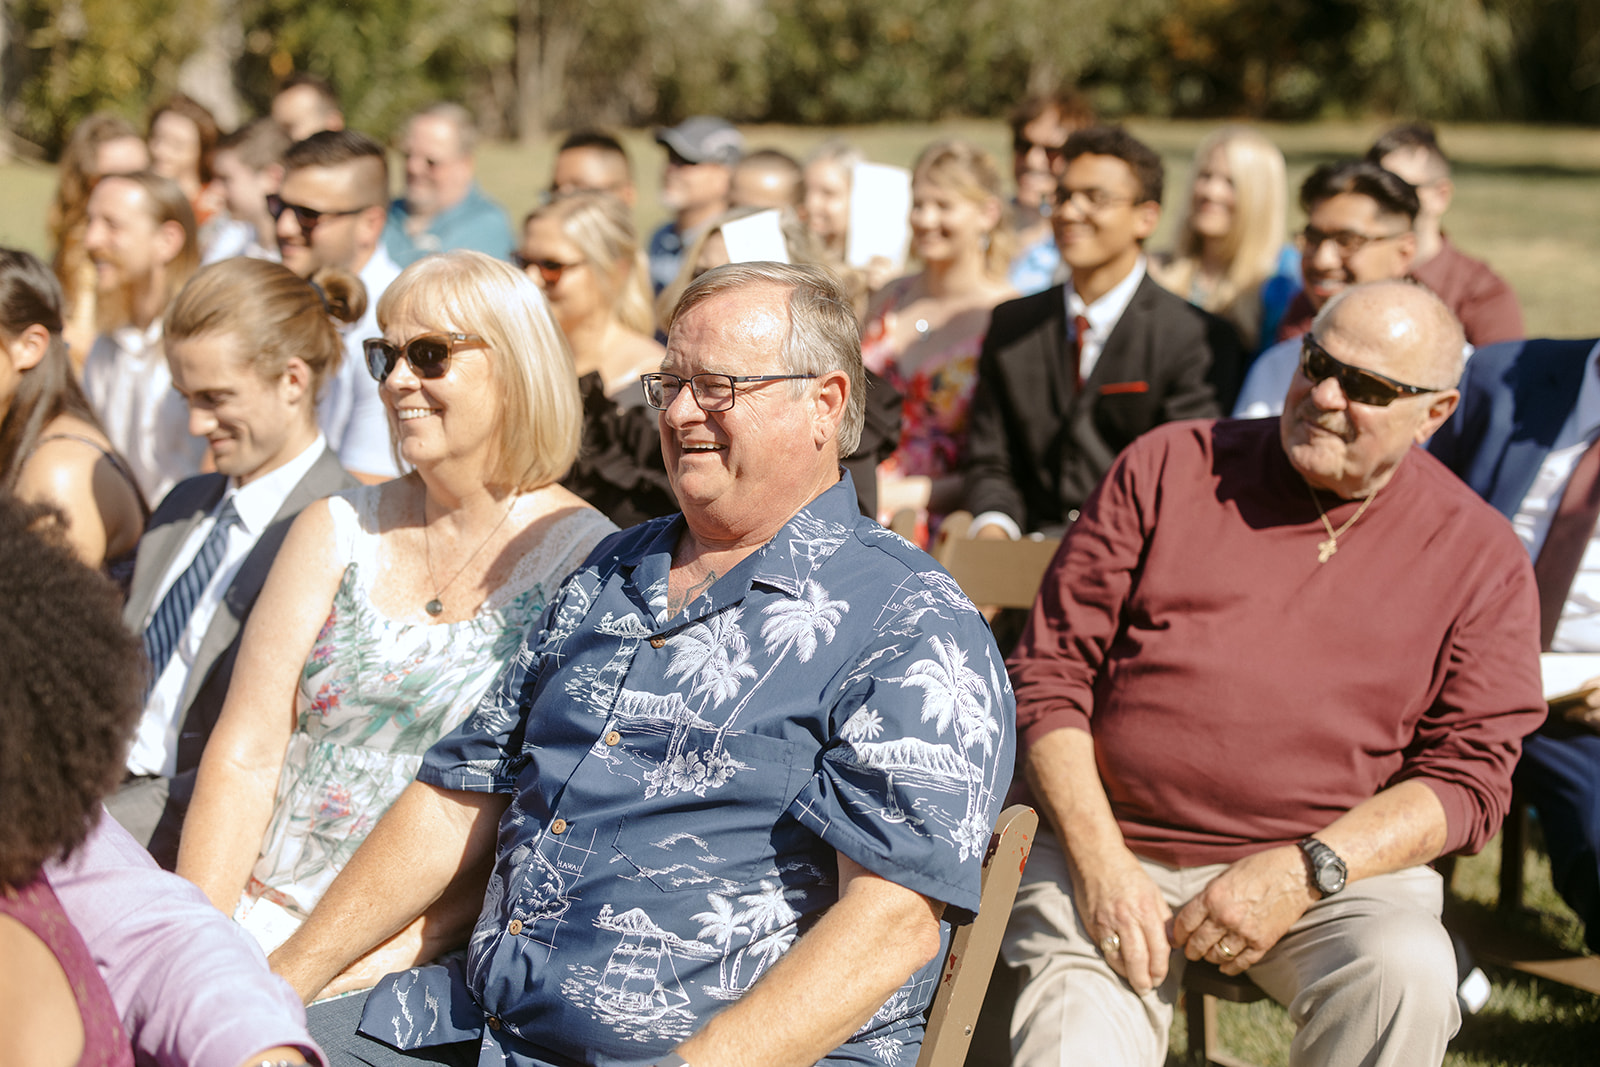 Guests laughing during wedding ceremony at La Arboleda in California